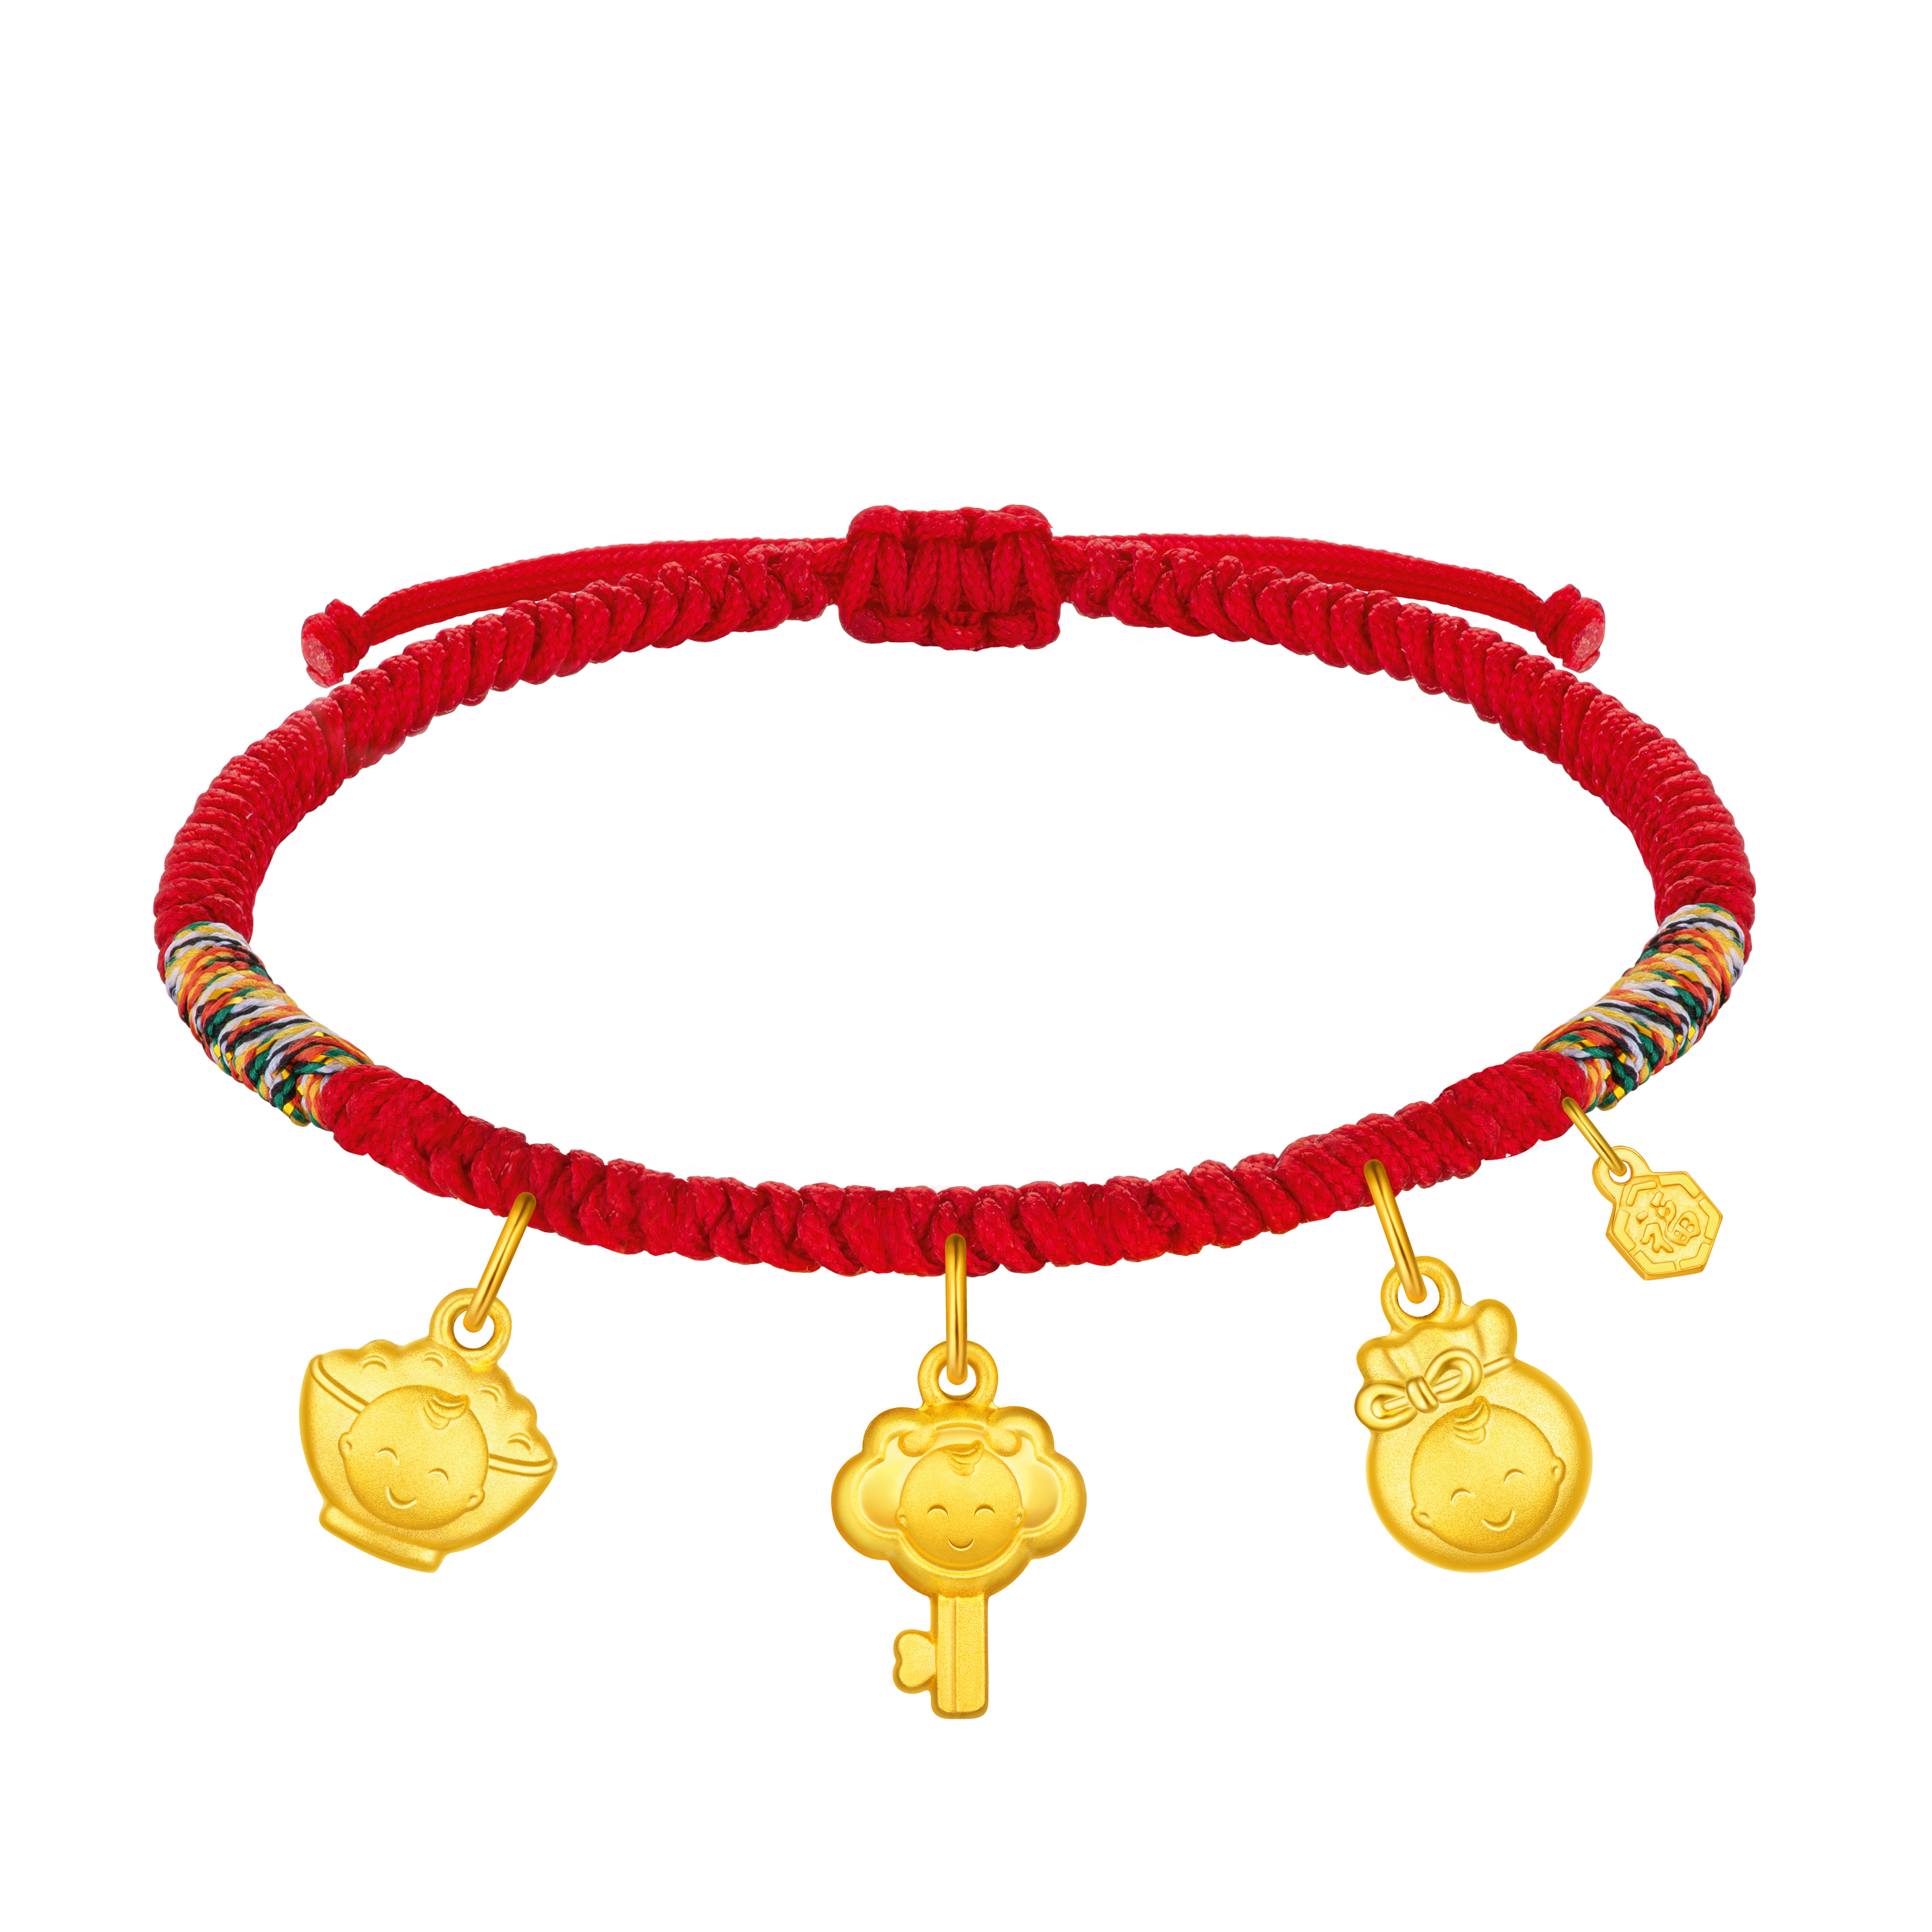 Hugging Family Ka ka “Auspicious Treasures” (Gold Bowl, Gold Key,Gold Lucky Bag) Gold Cord Bracelet